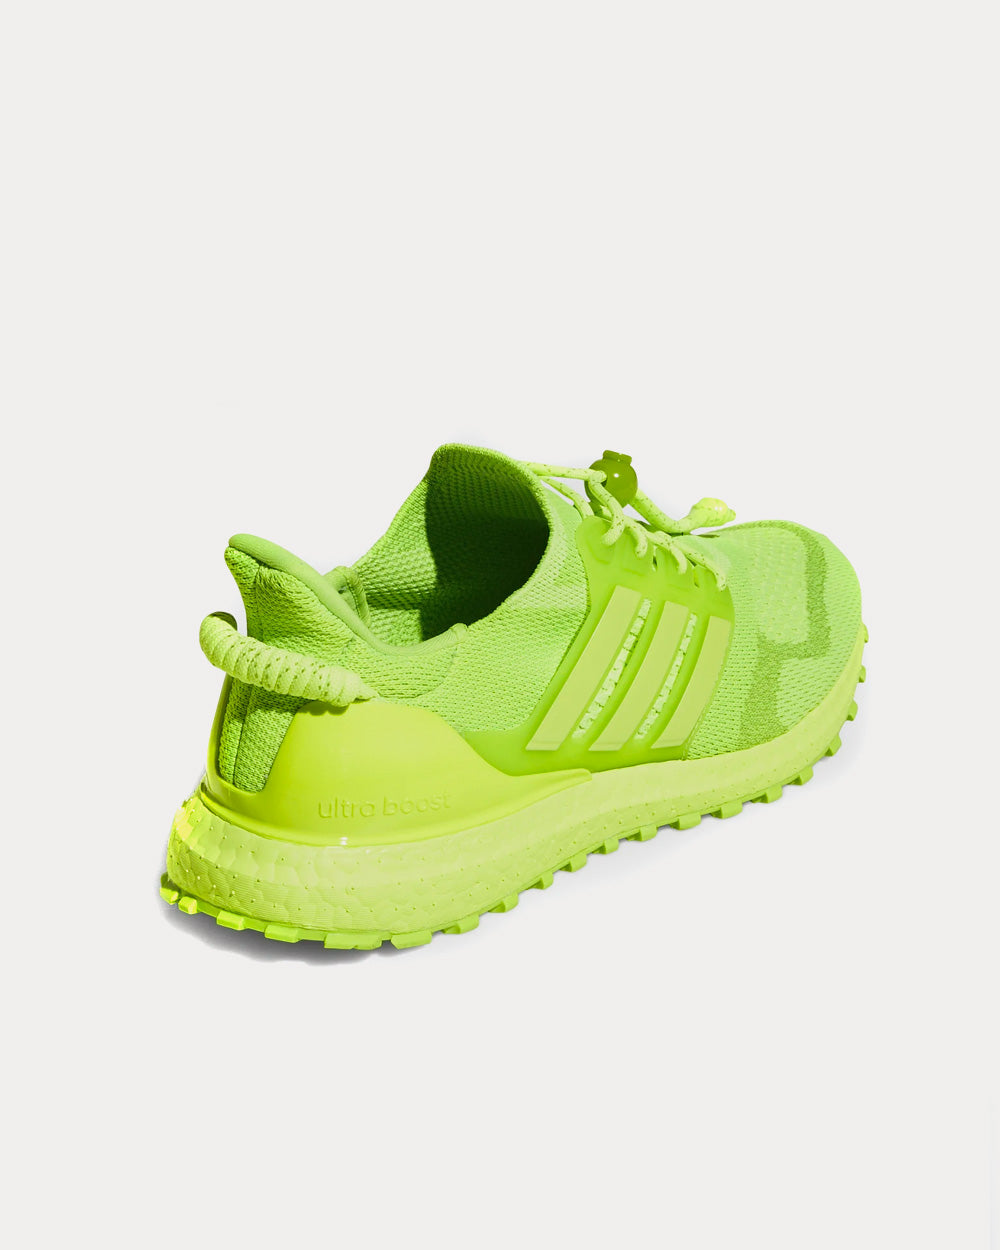 Adidas x Ivy Park - UltraBOOST Solar Green / Signal Green / Semi Solar Green Running Shoes